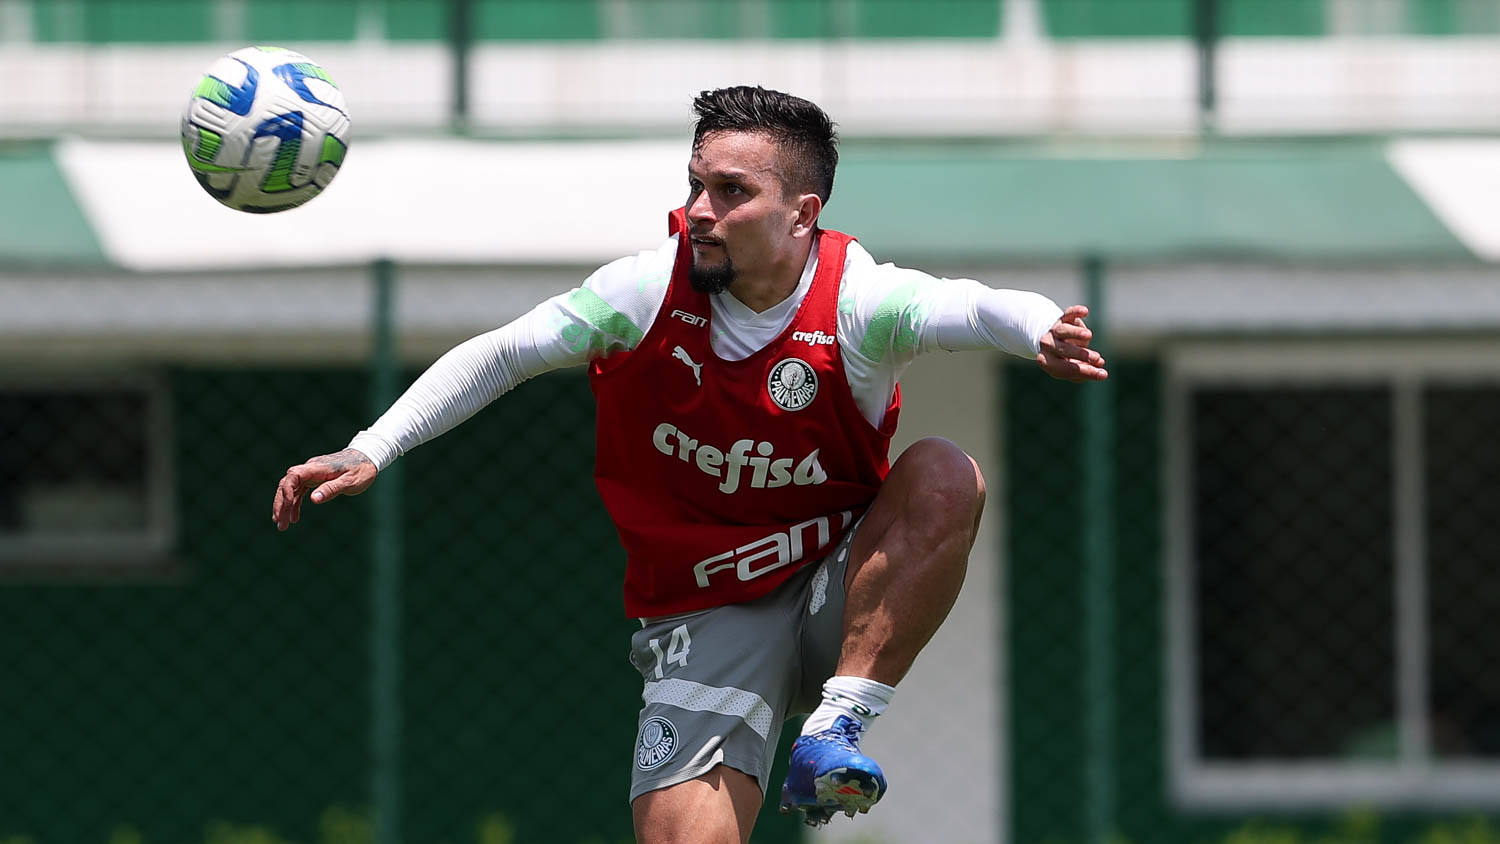 Artur, do Palmeiras, pode estar de saída para time europeu, diz jornalista. (Foto: Cesar Greco/Palmeiras)